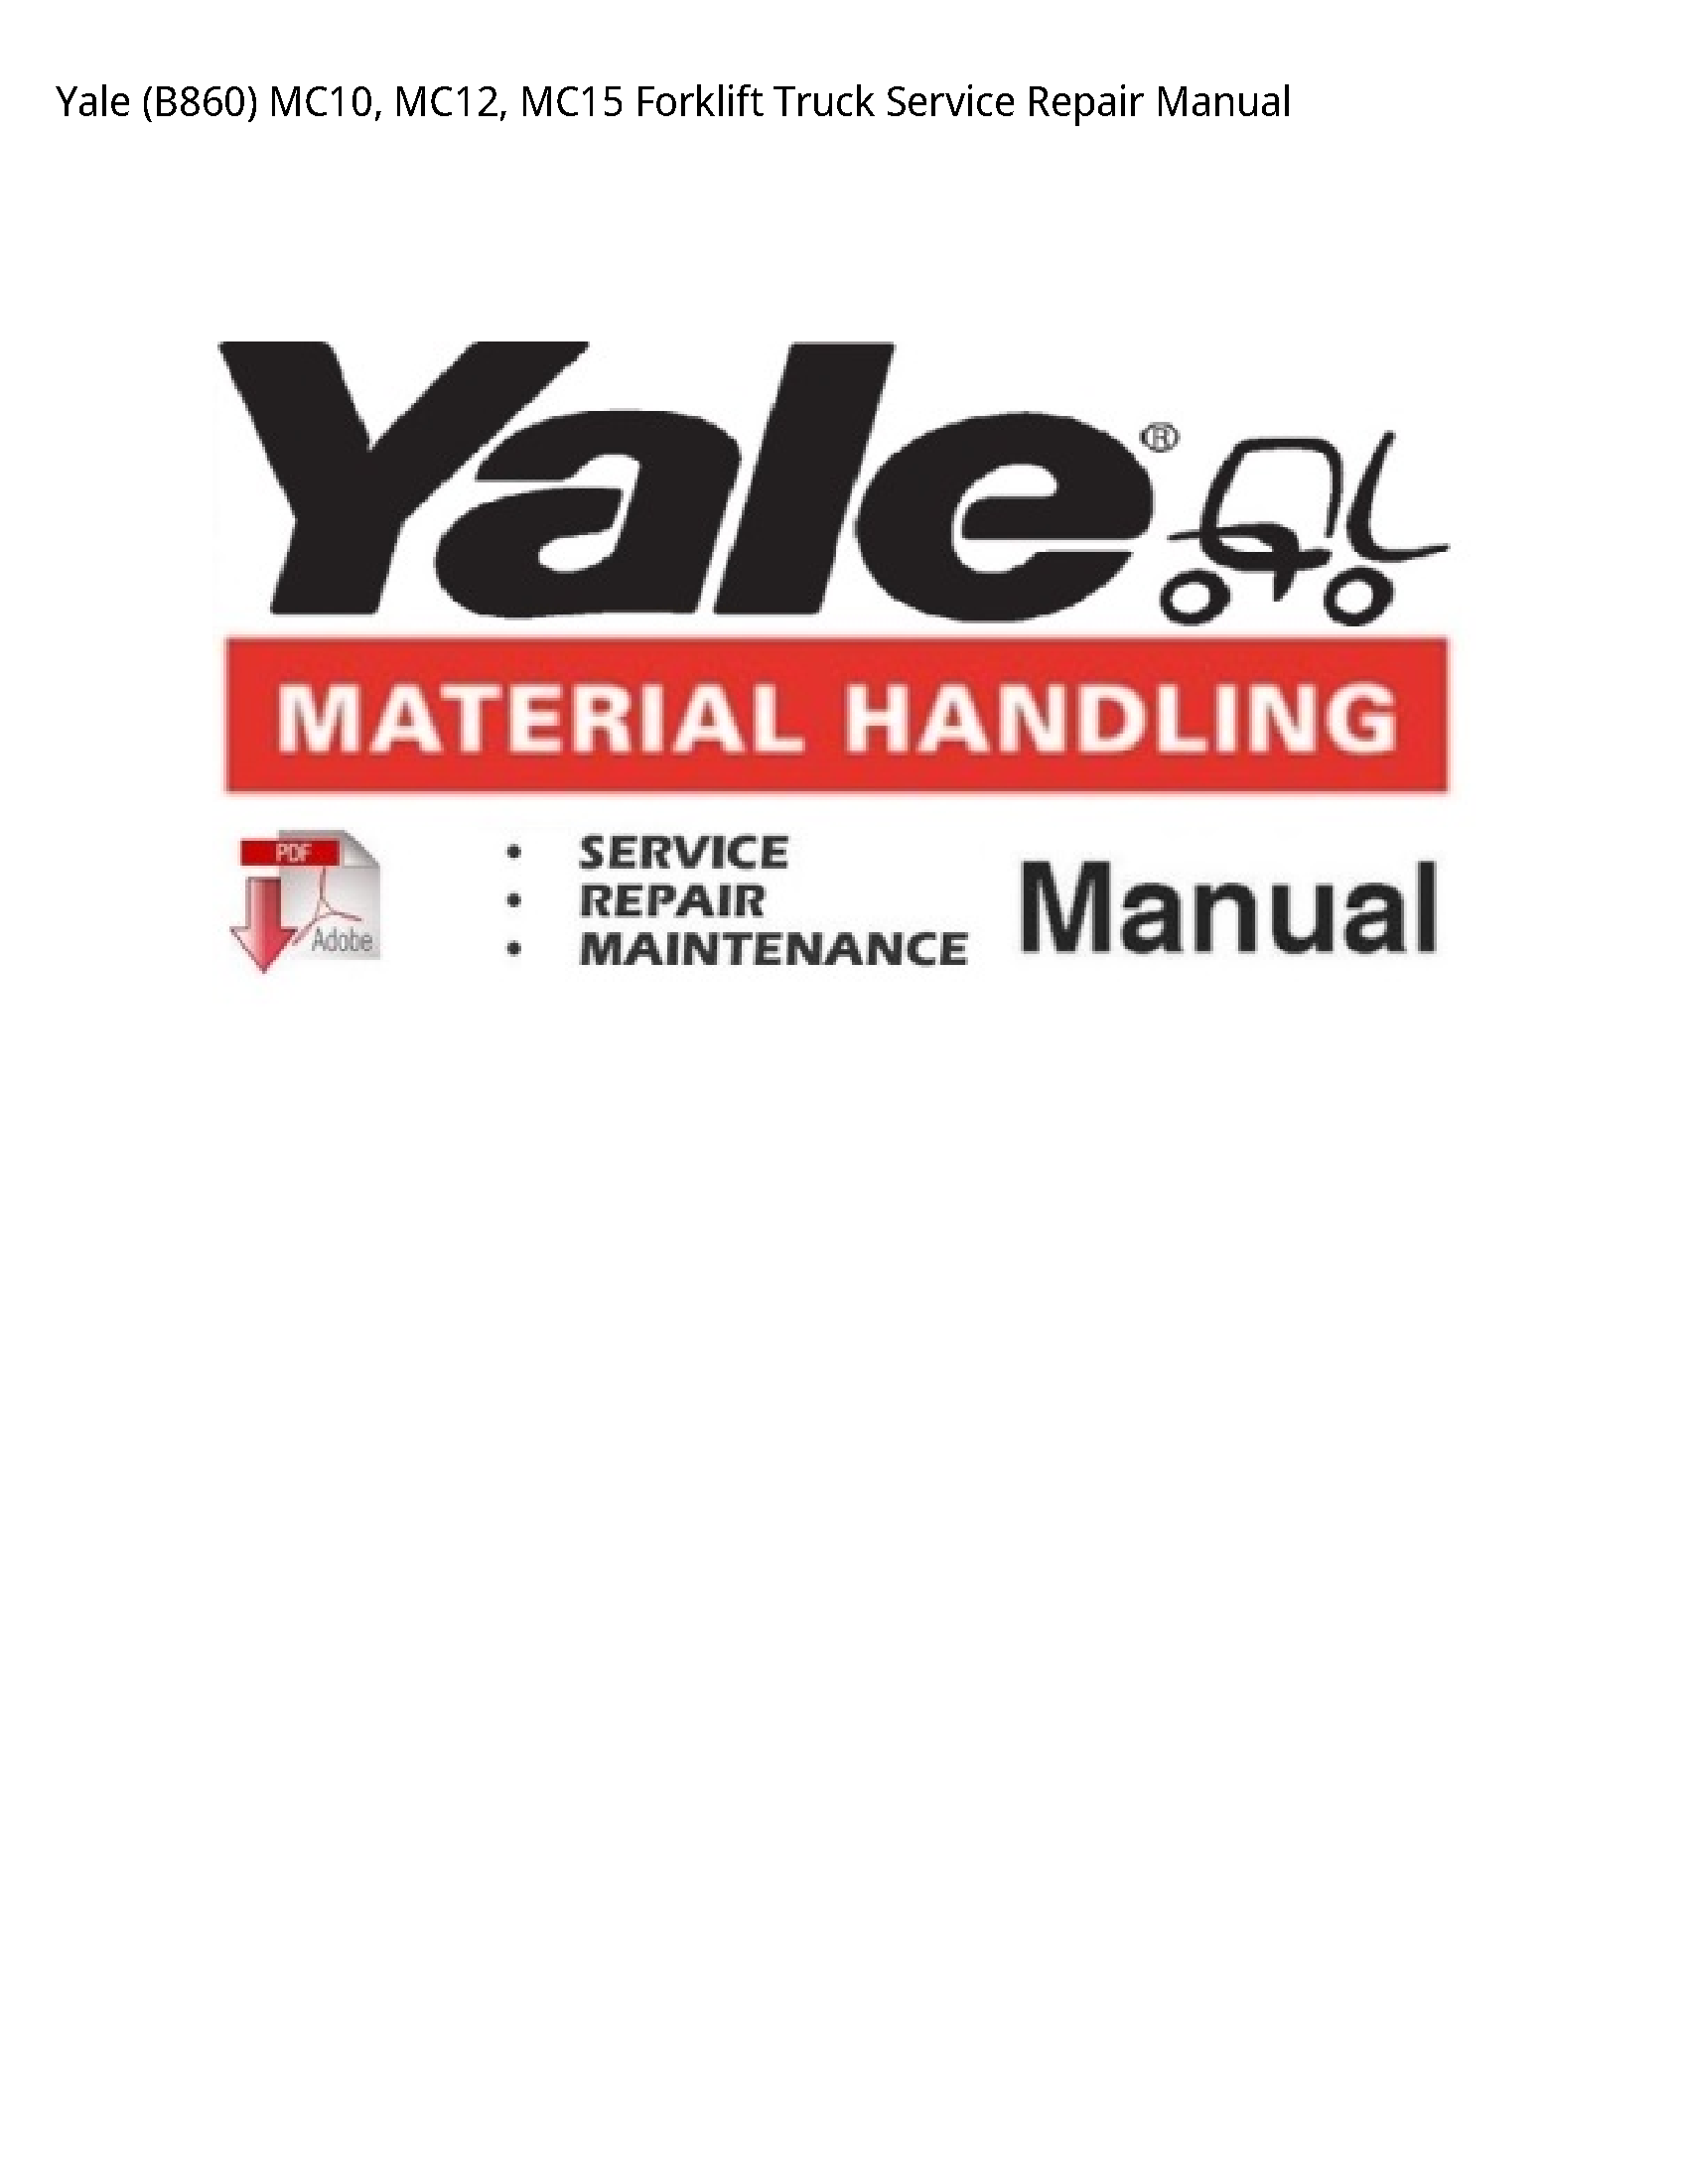 Yale (B860) Forklift Truck manual